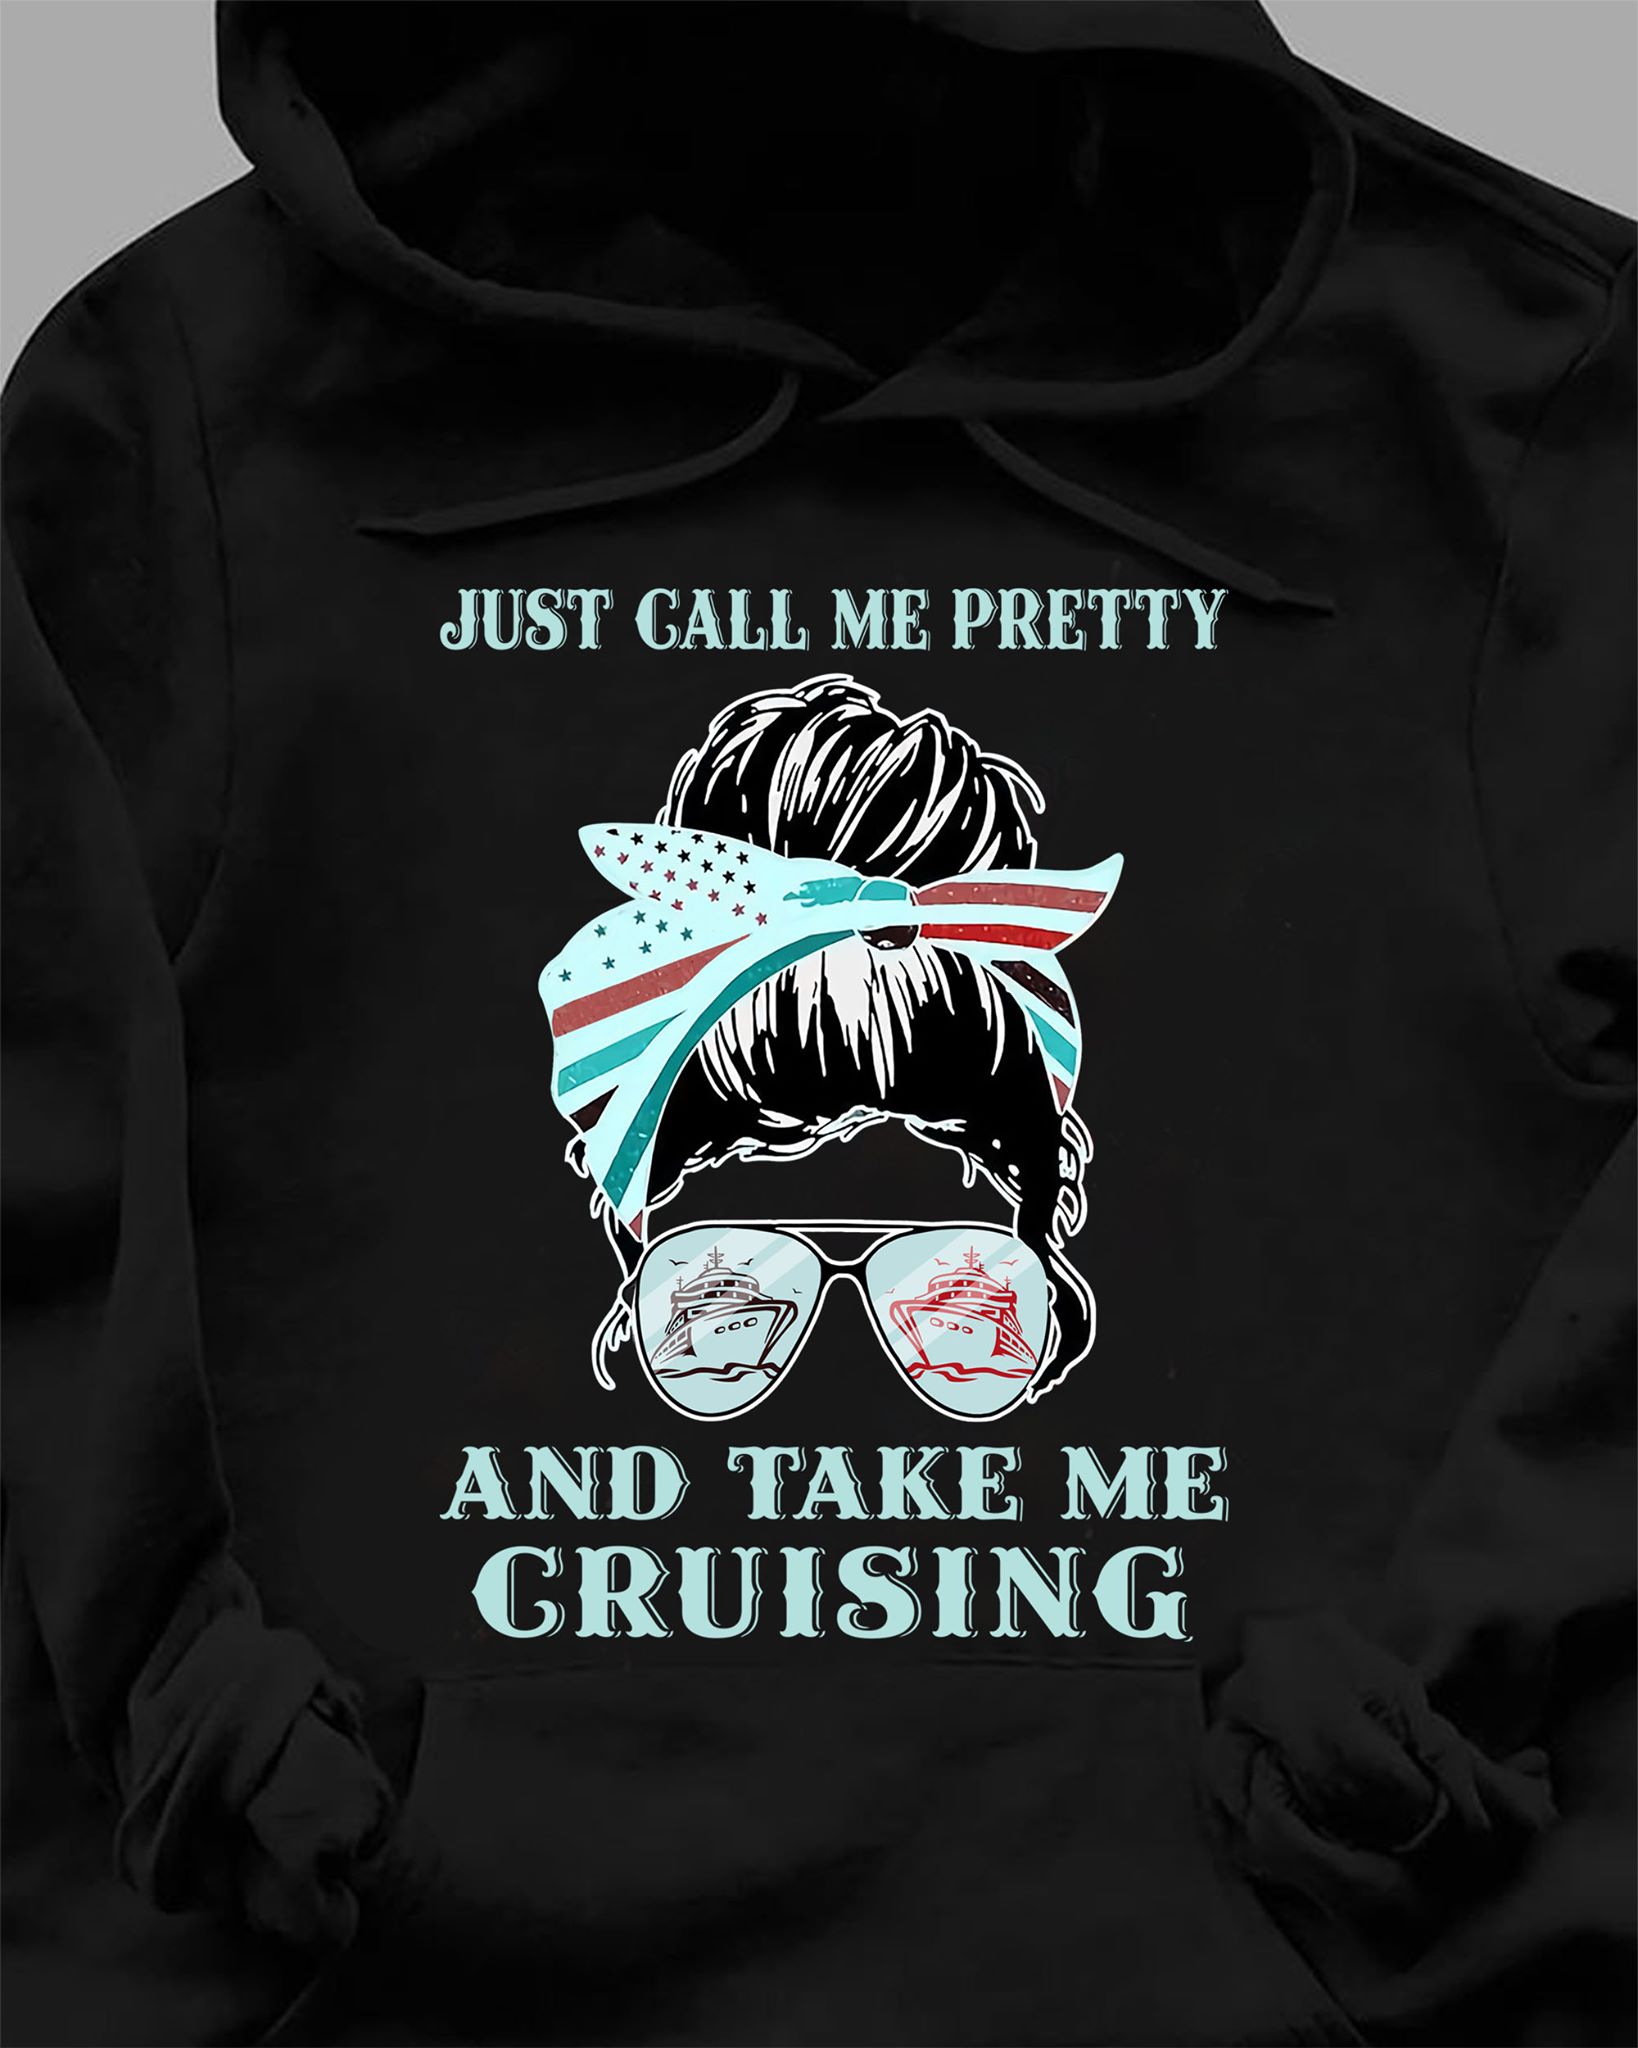 Just call me pretty and take me cruising - Love cruising